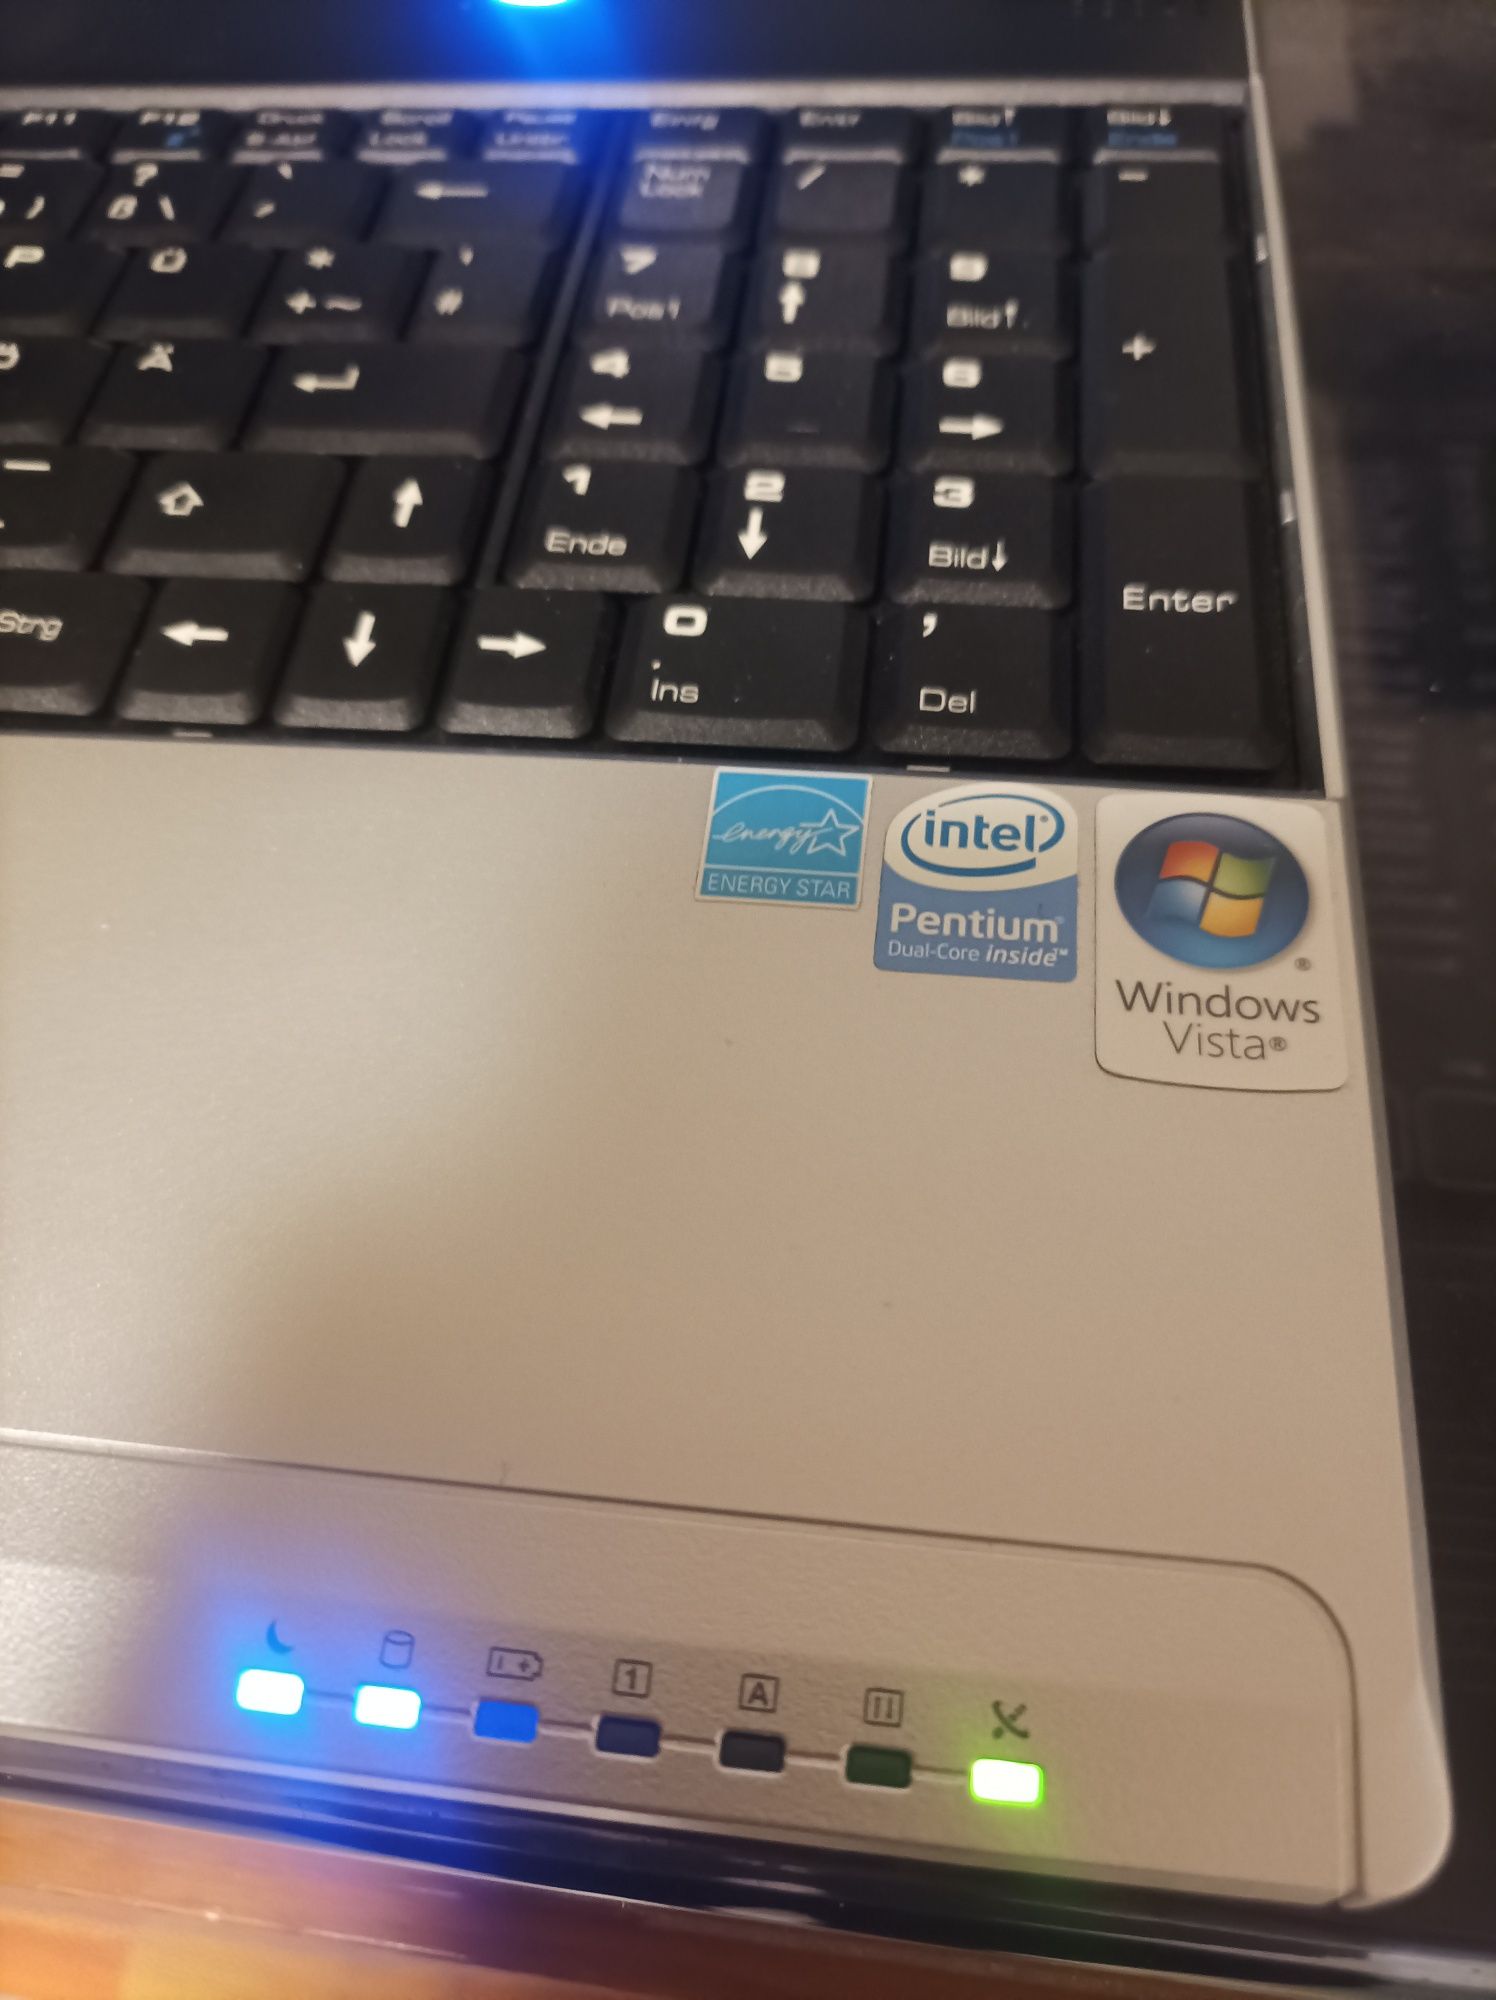 MCI laptop VR603